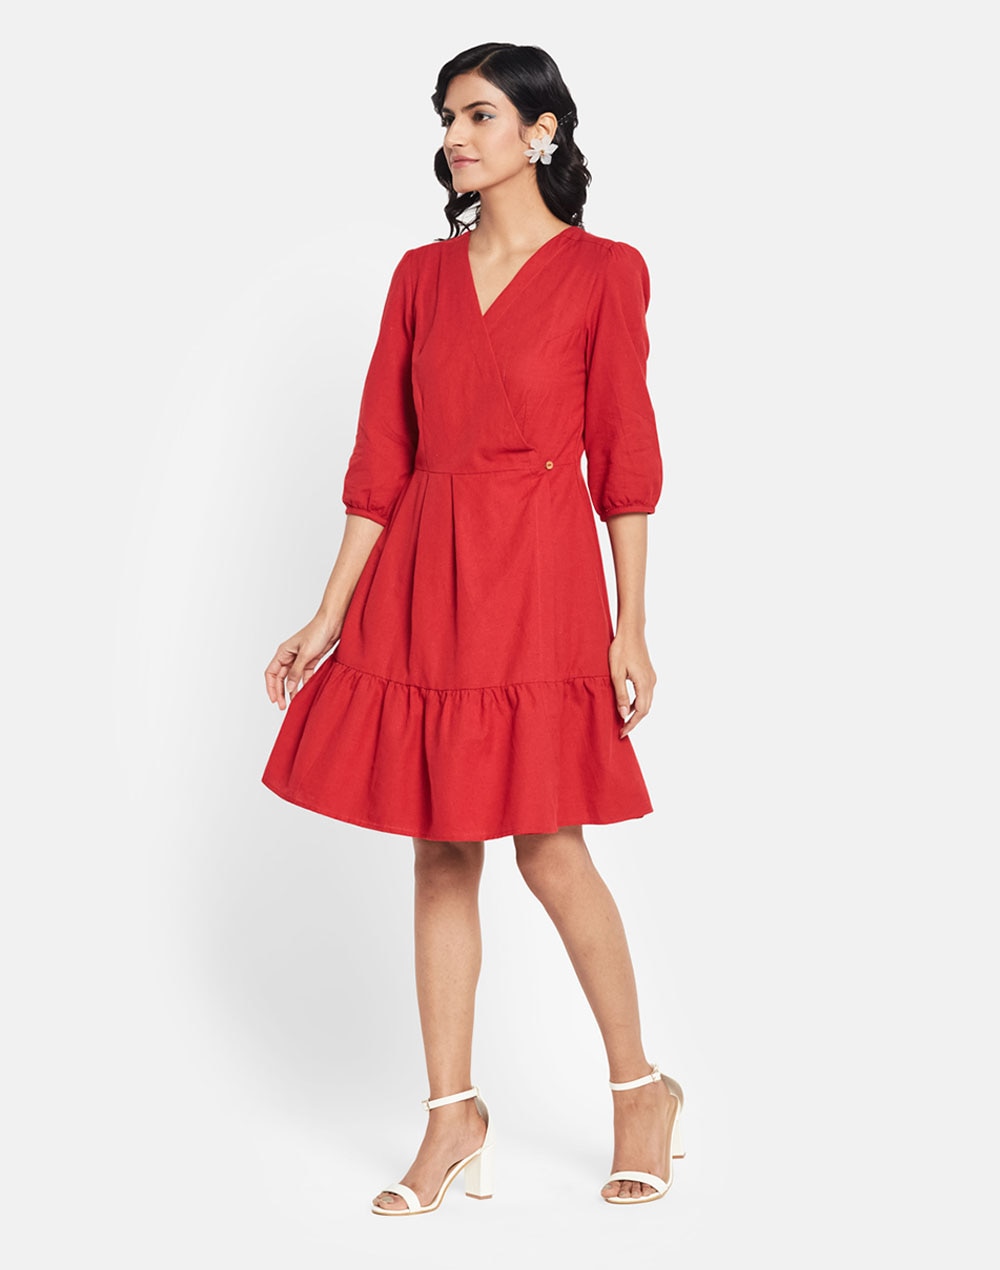 FabNu Red Cotton Linen Knee Length Midi Dress